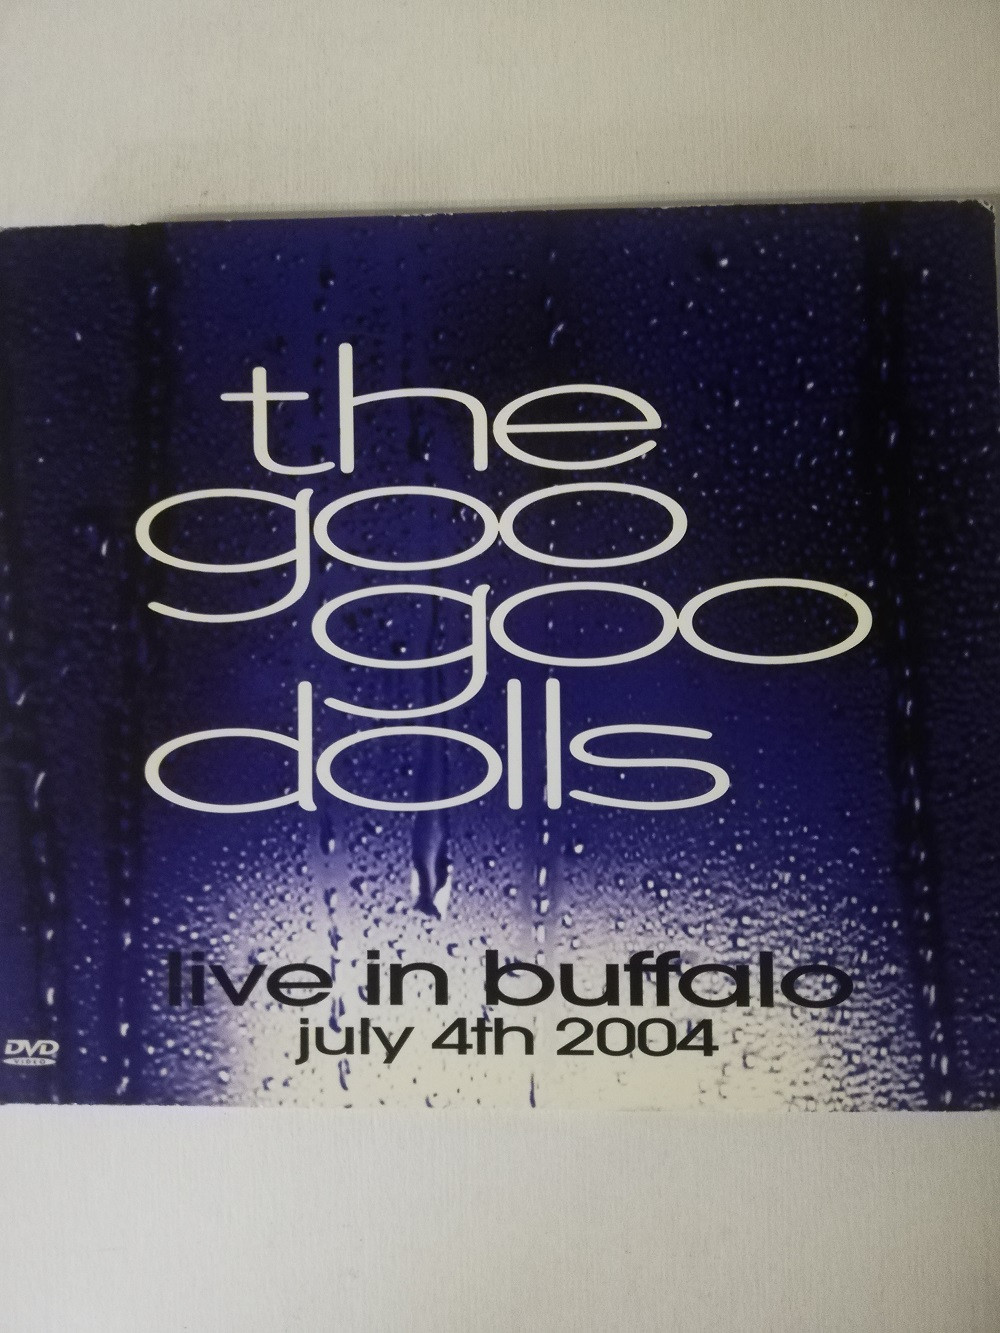 Imagen CD + DVD THE GOO GOO DOLLS - LIVE BUFFALO 